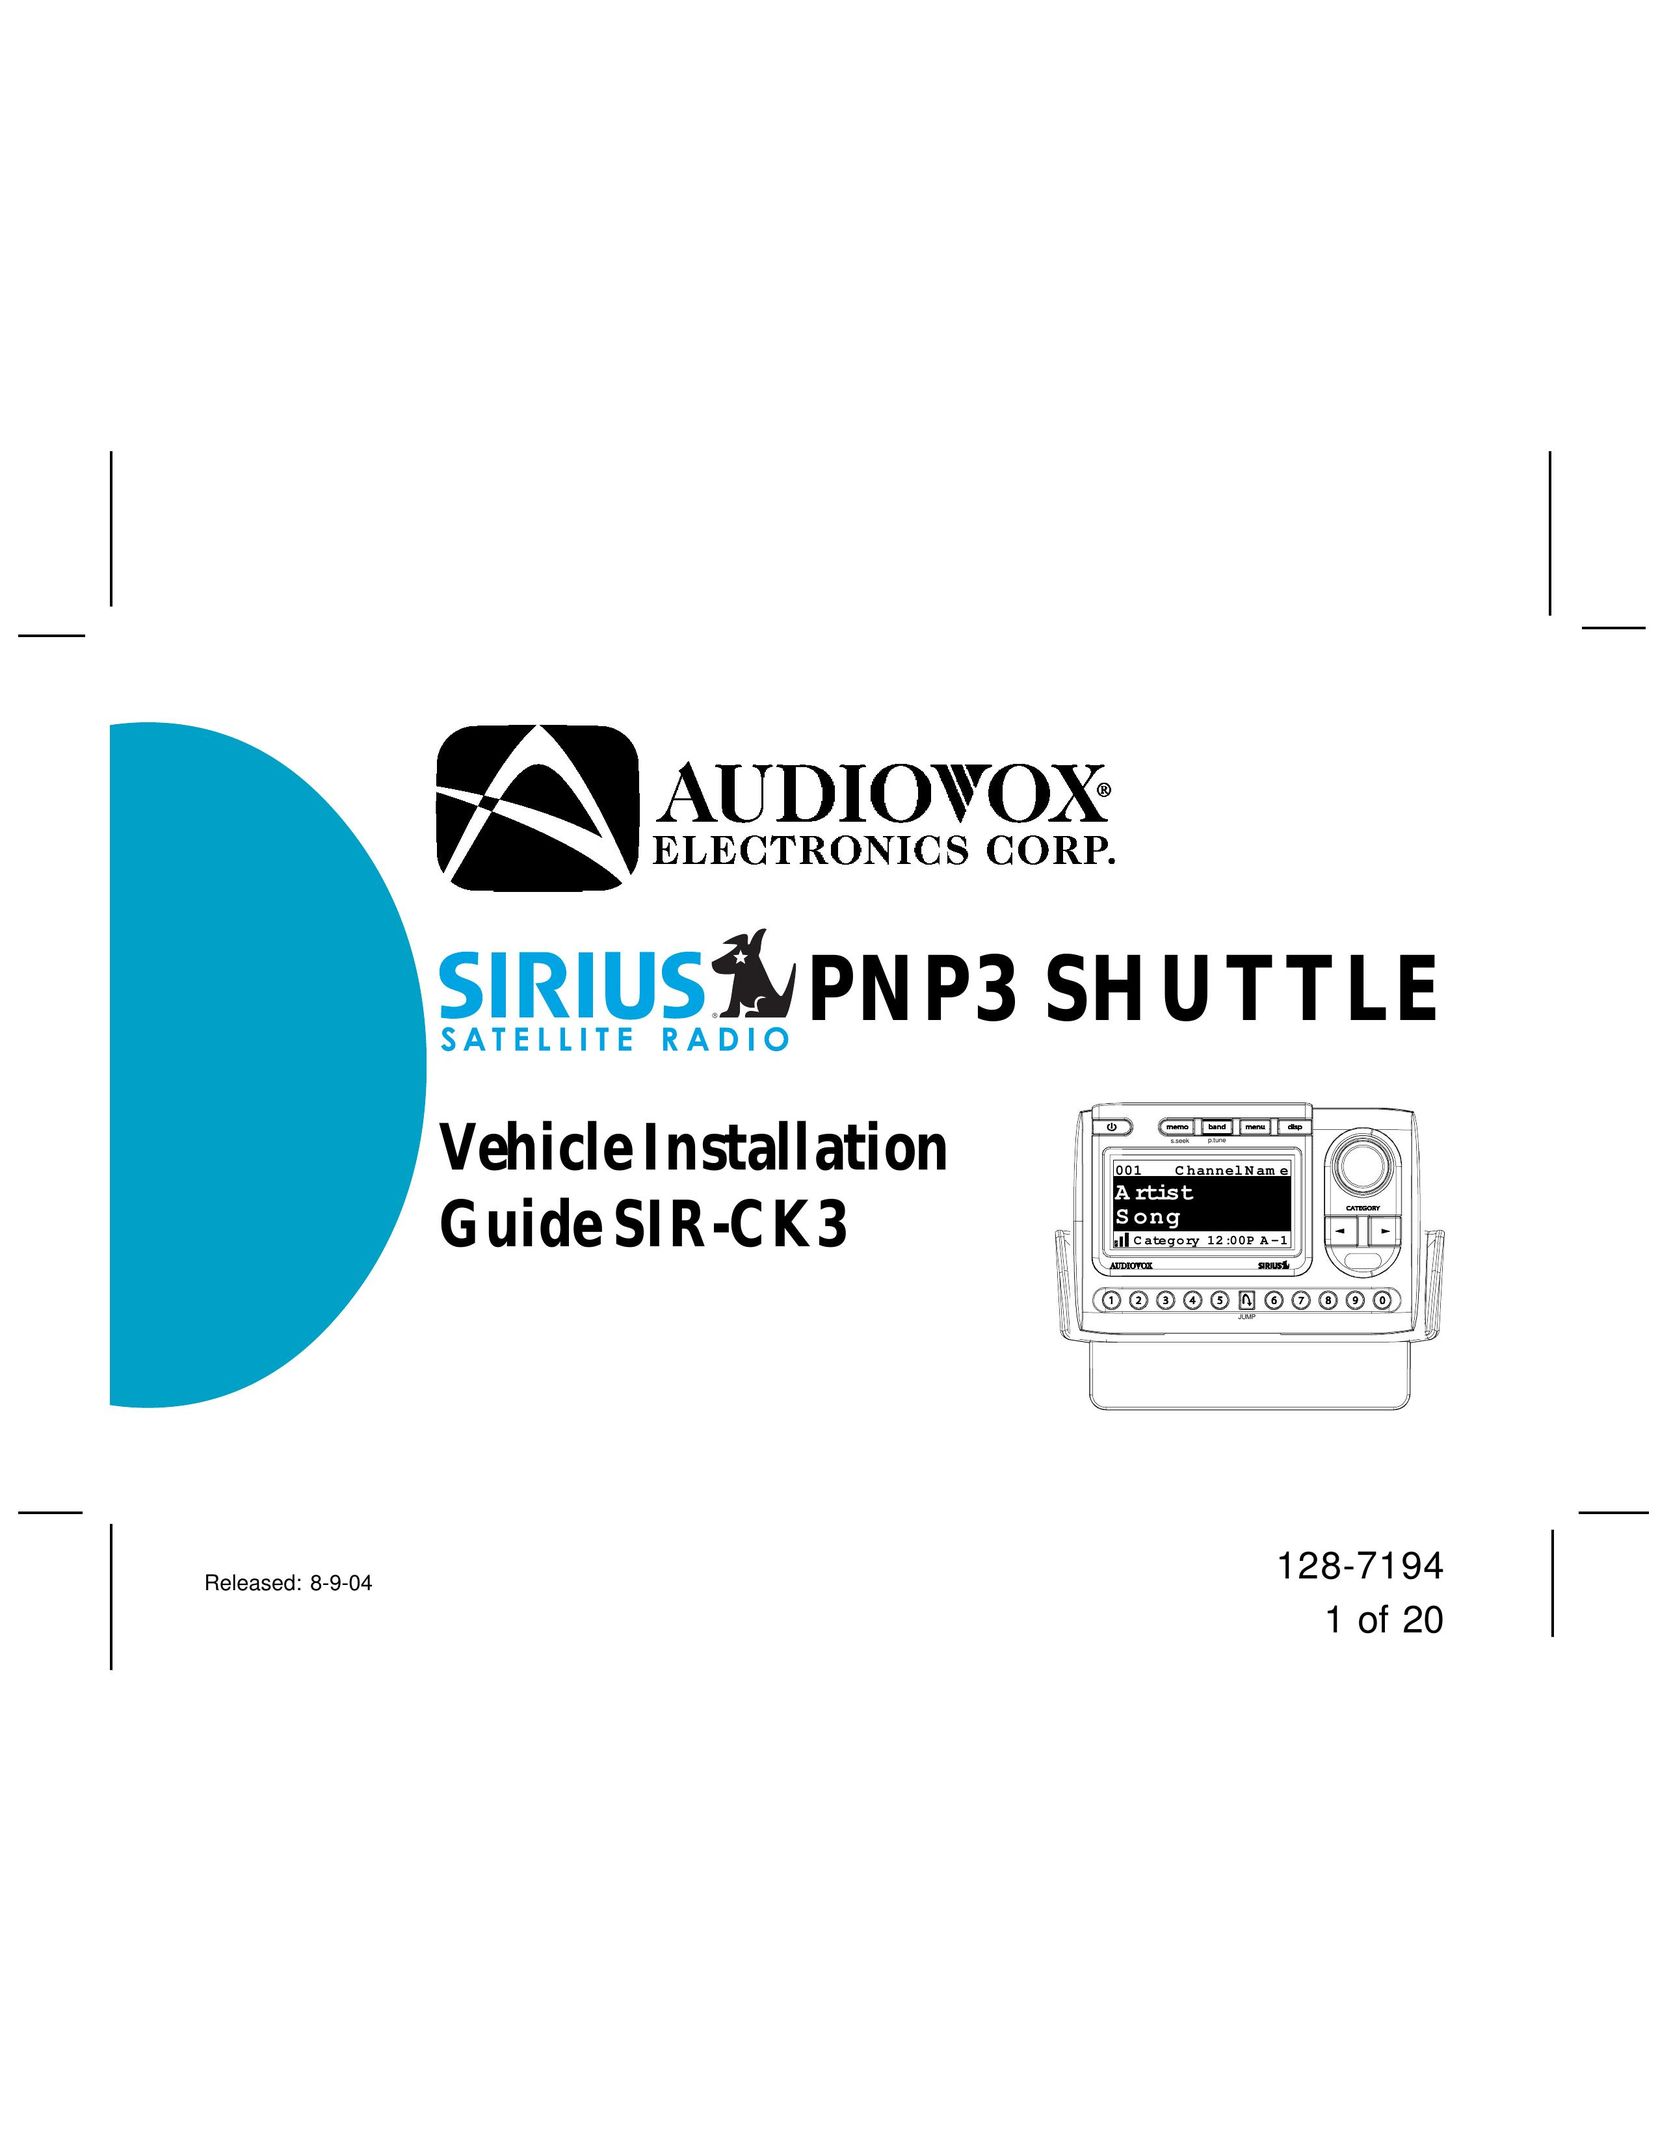 Audiovox SIR-CK3 Car Satellite Radio System User Manual